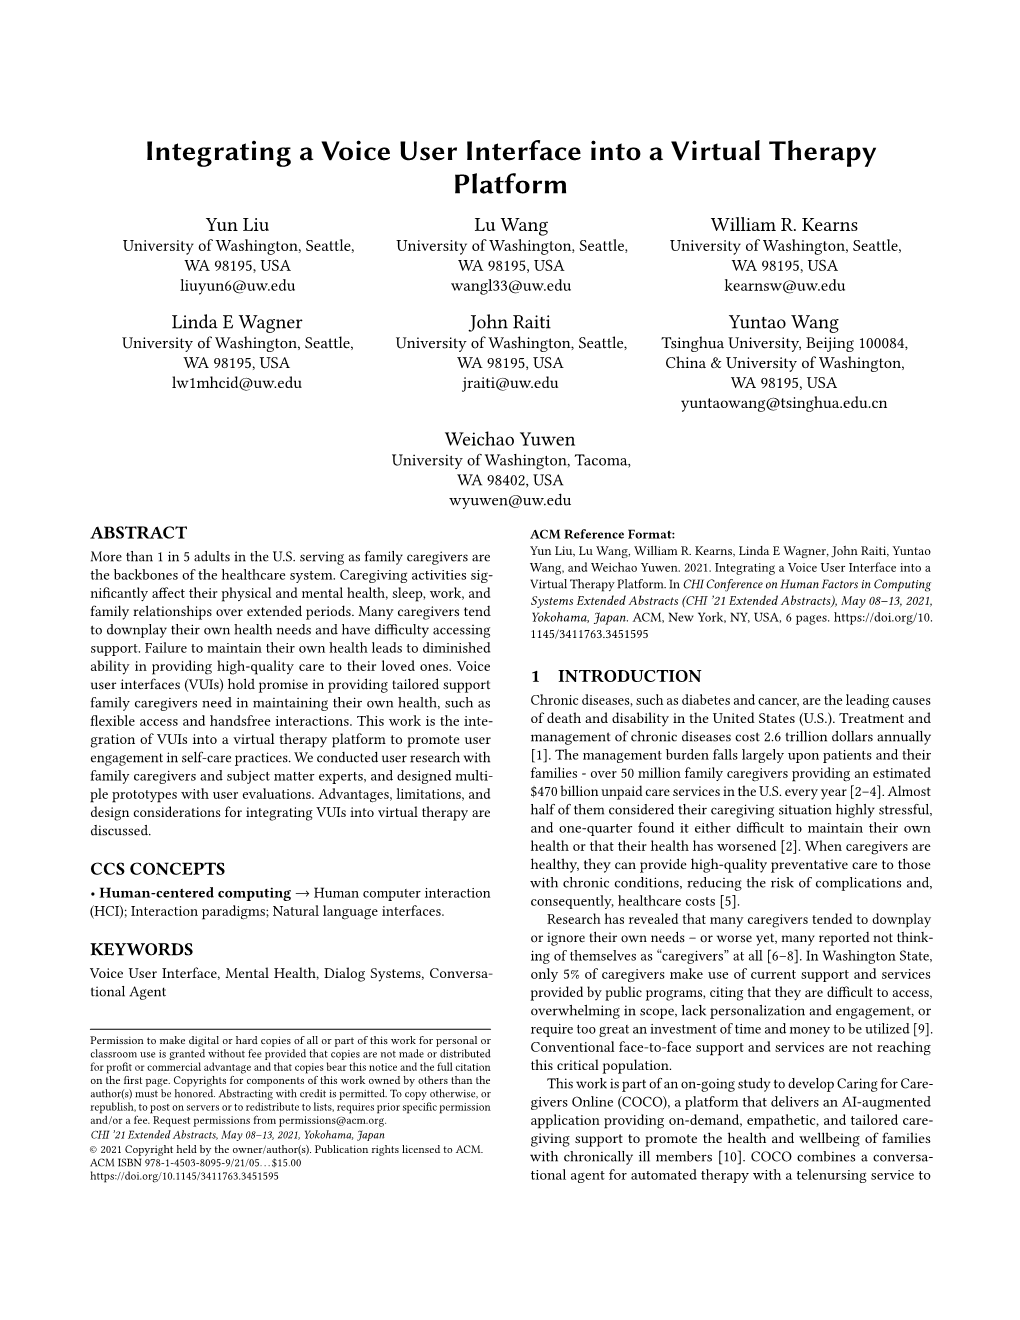 Integrating a Voice User Interface Into a Virtual Therapy Platform Yun Liu Lu Wang William R